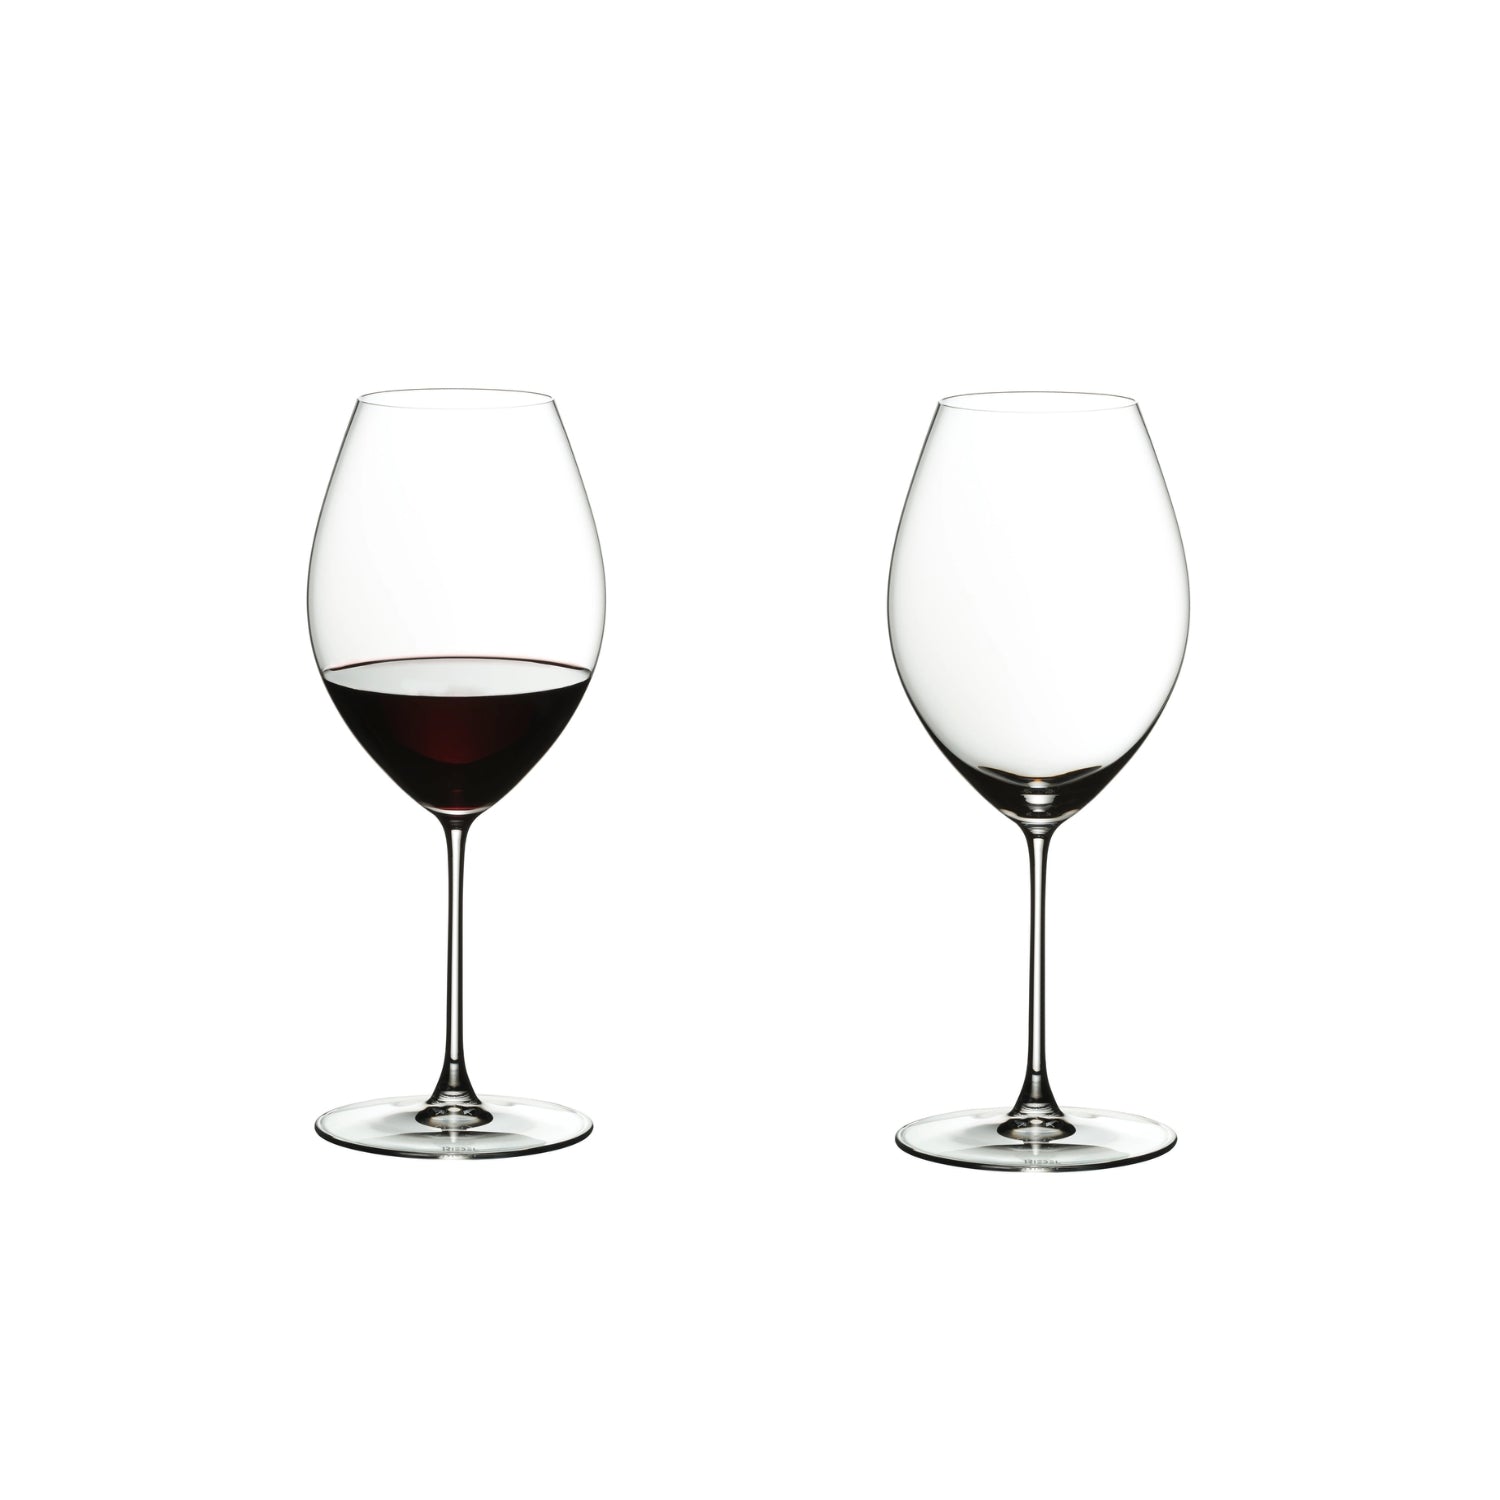 Riedel Veritas Old World Syrah glass Set of 2 glasses, Set of 2 glasses